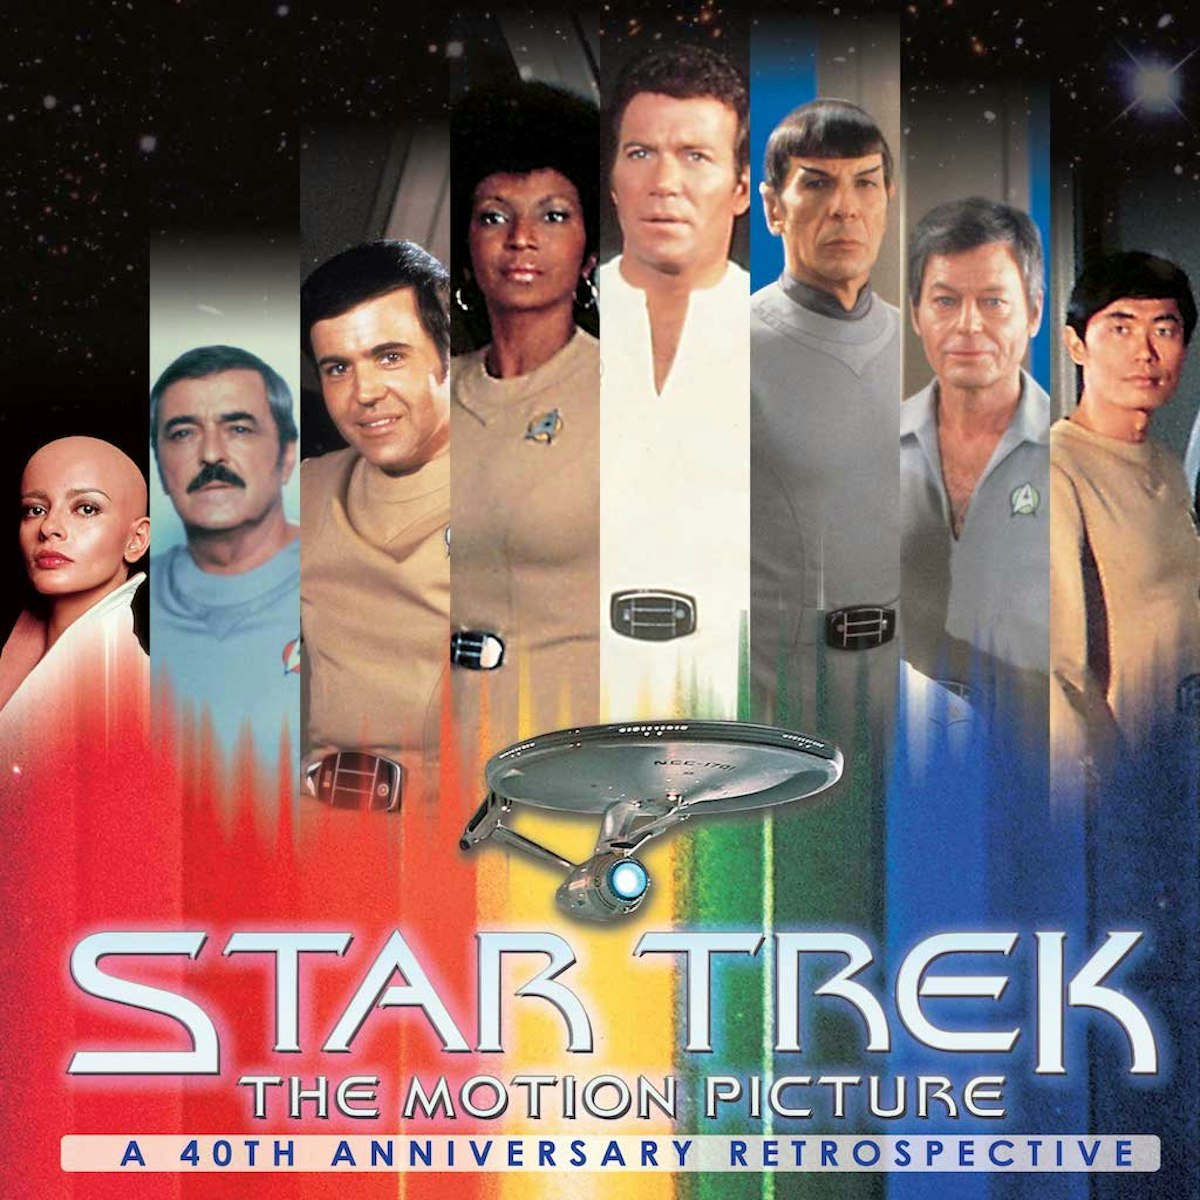 featured image - Star Trek Movie’s 40th anniversary, Superintelligence and the Singularity